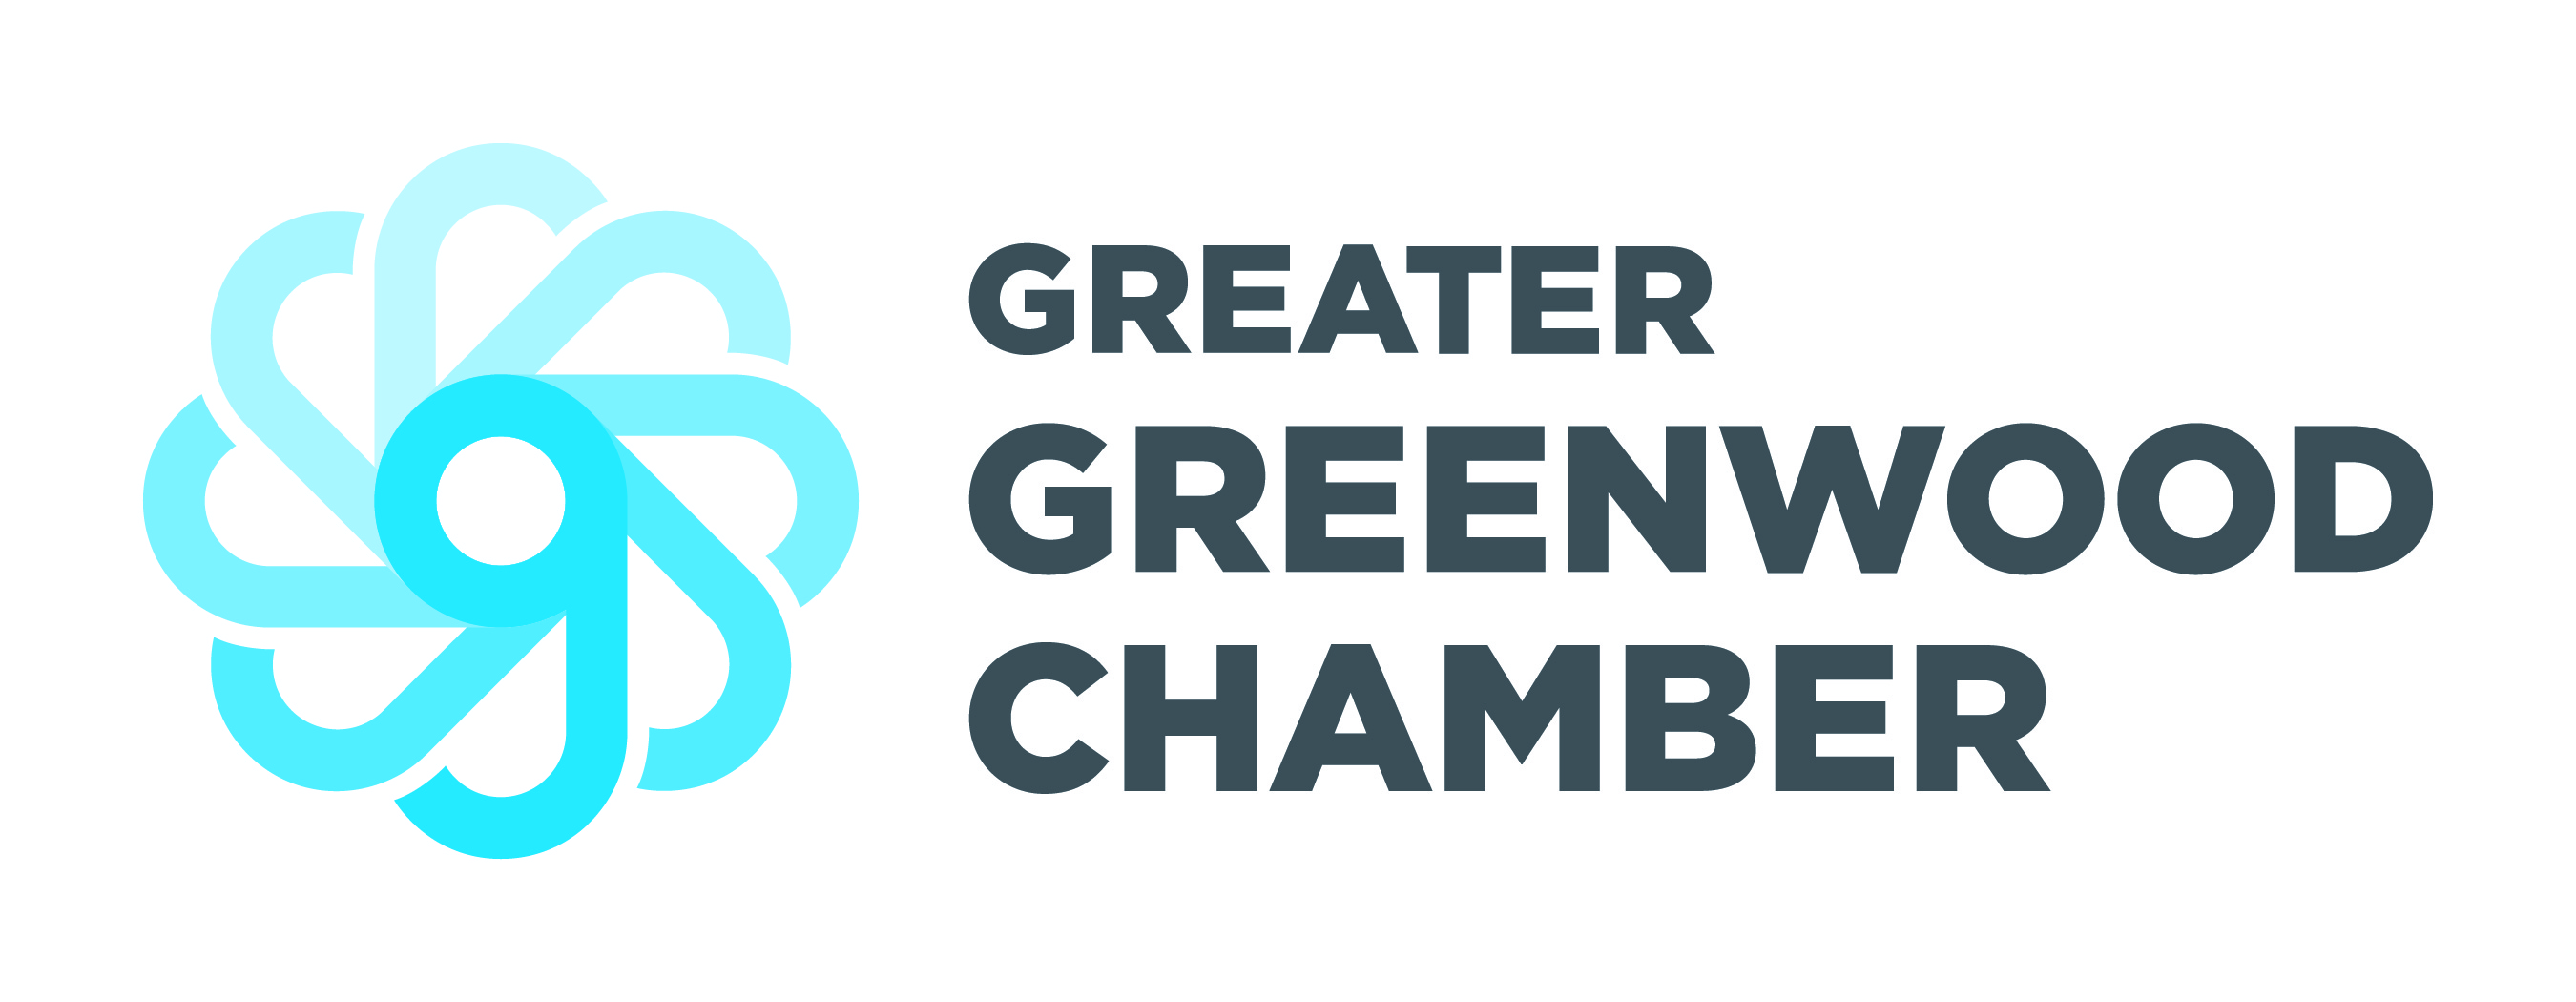 Greenwood Chamber - 2018